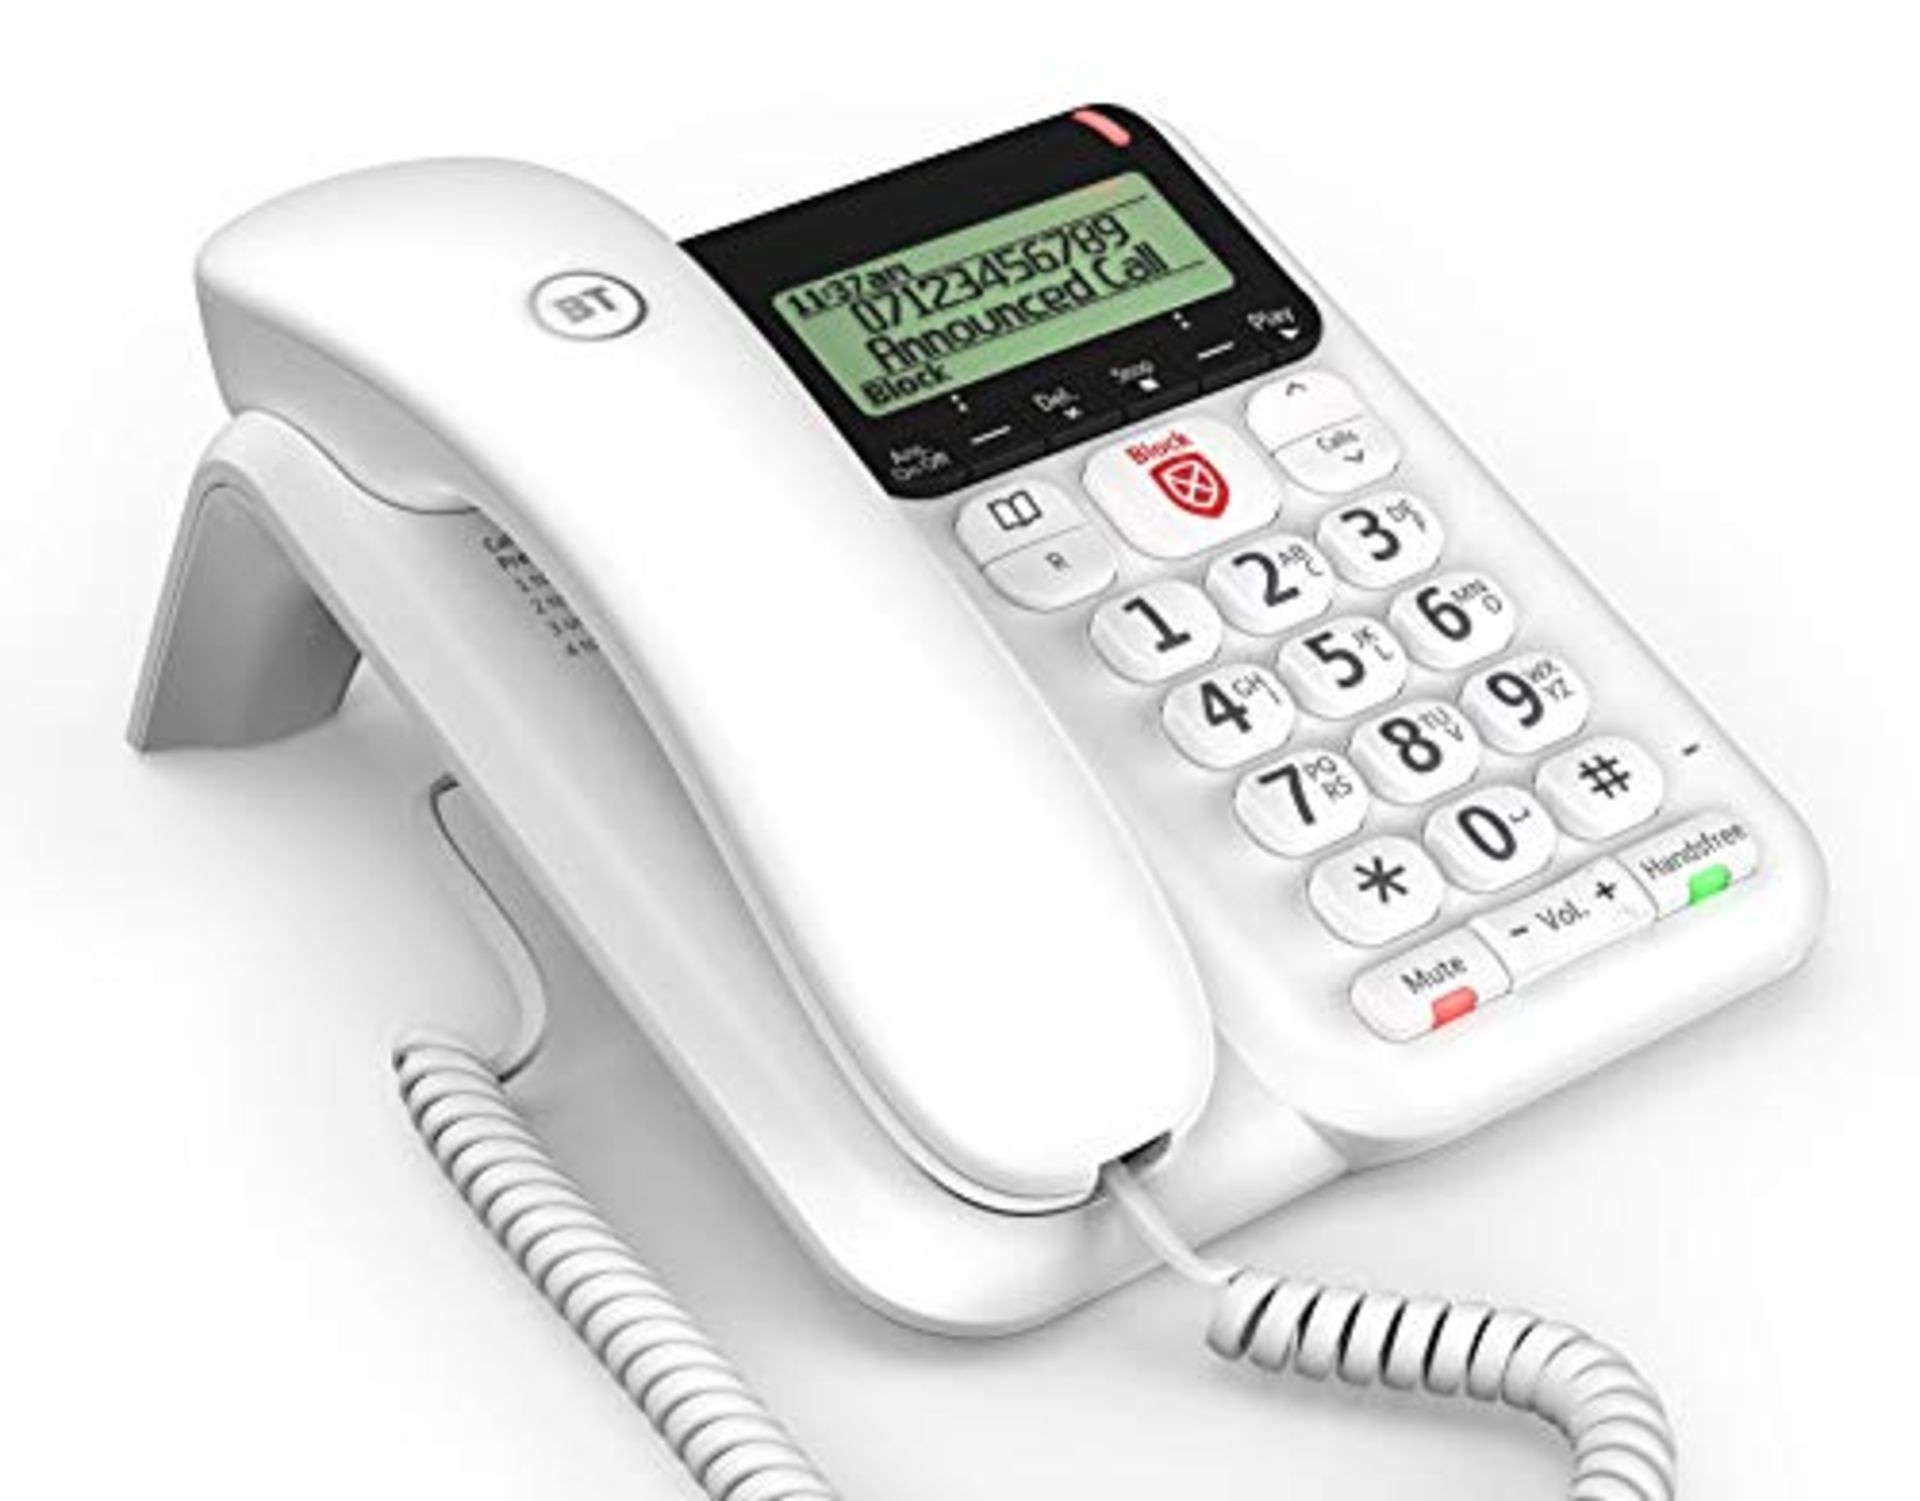 BT Décor 2600 Corded Landline House Phone with Advanced Nuisance Call Blocker